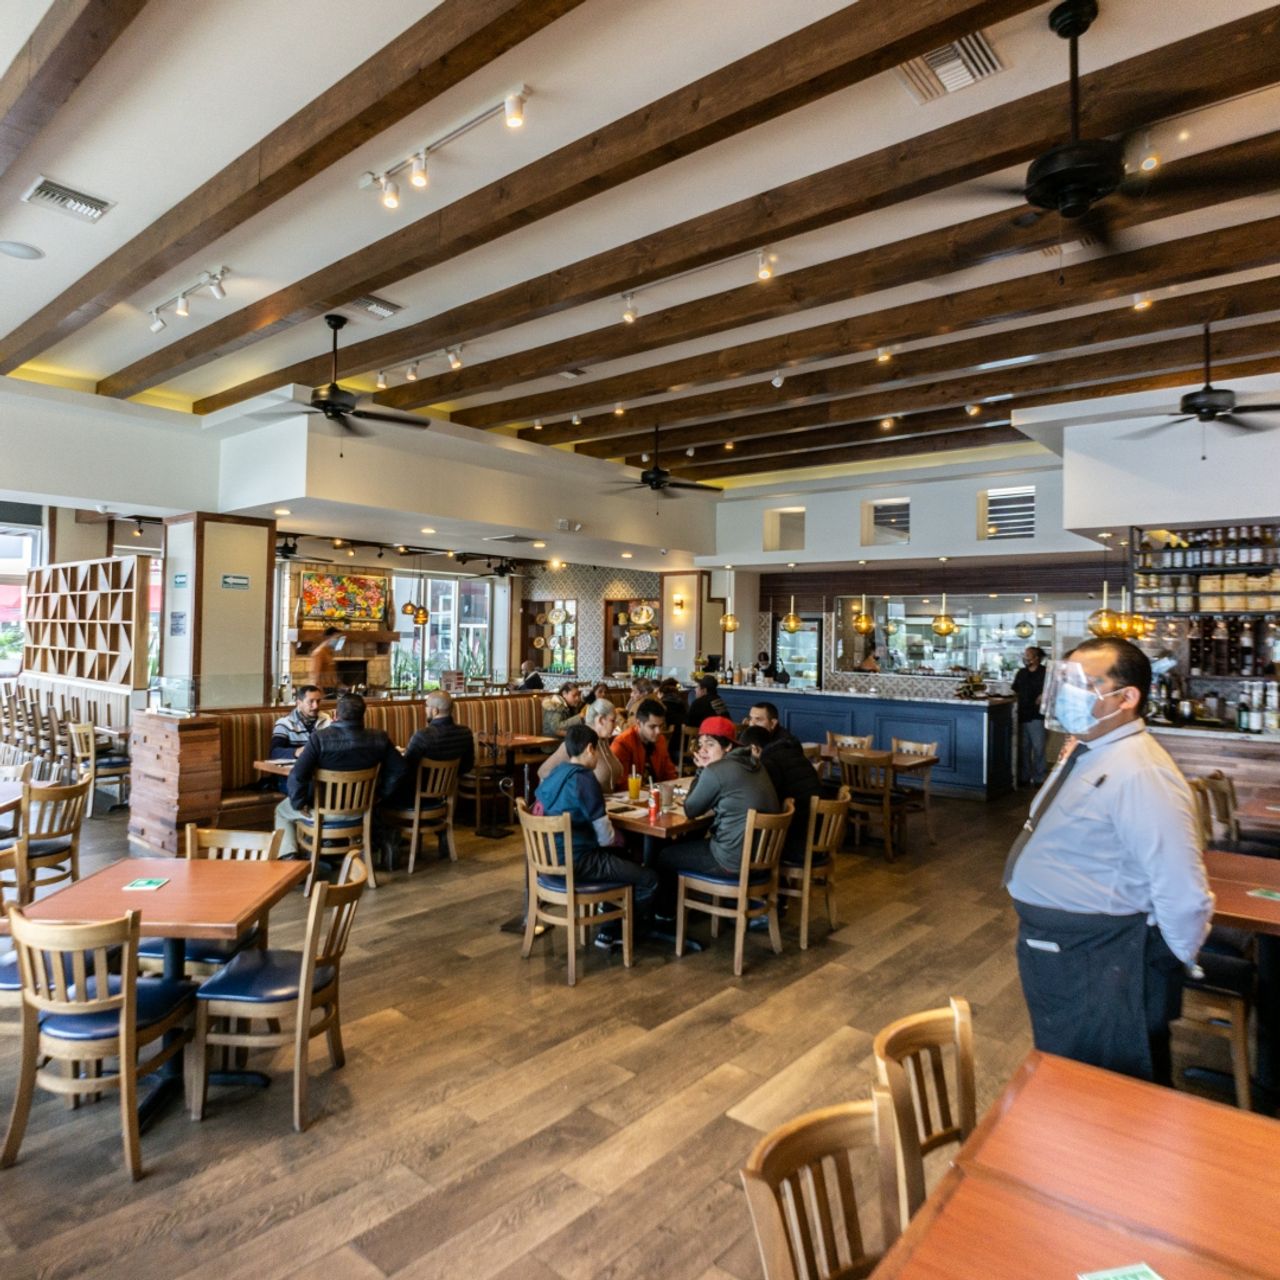 CAFE DE LA FLOR - PACIFICO Restaurant - Tijuana, BCN | OpenTable